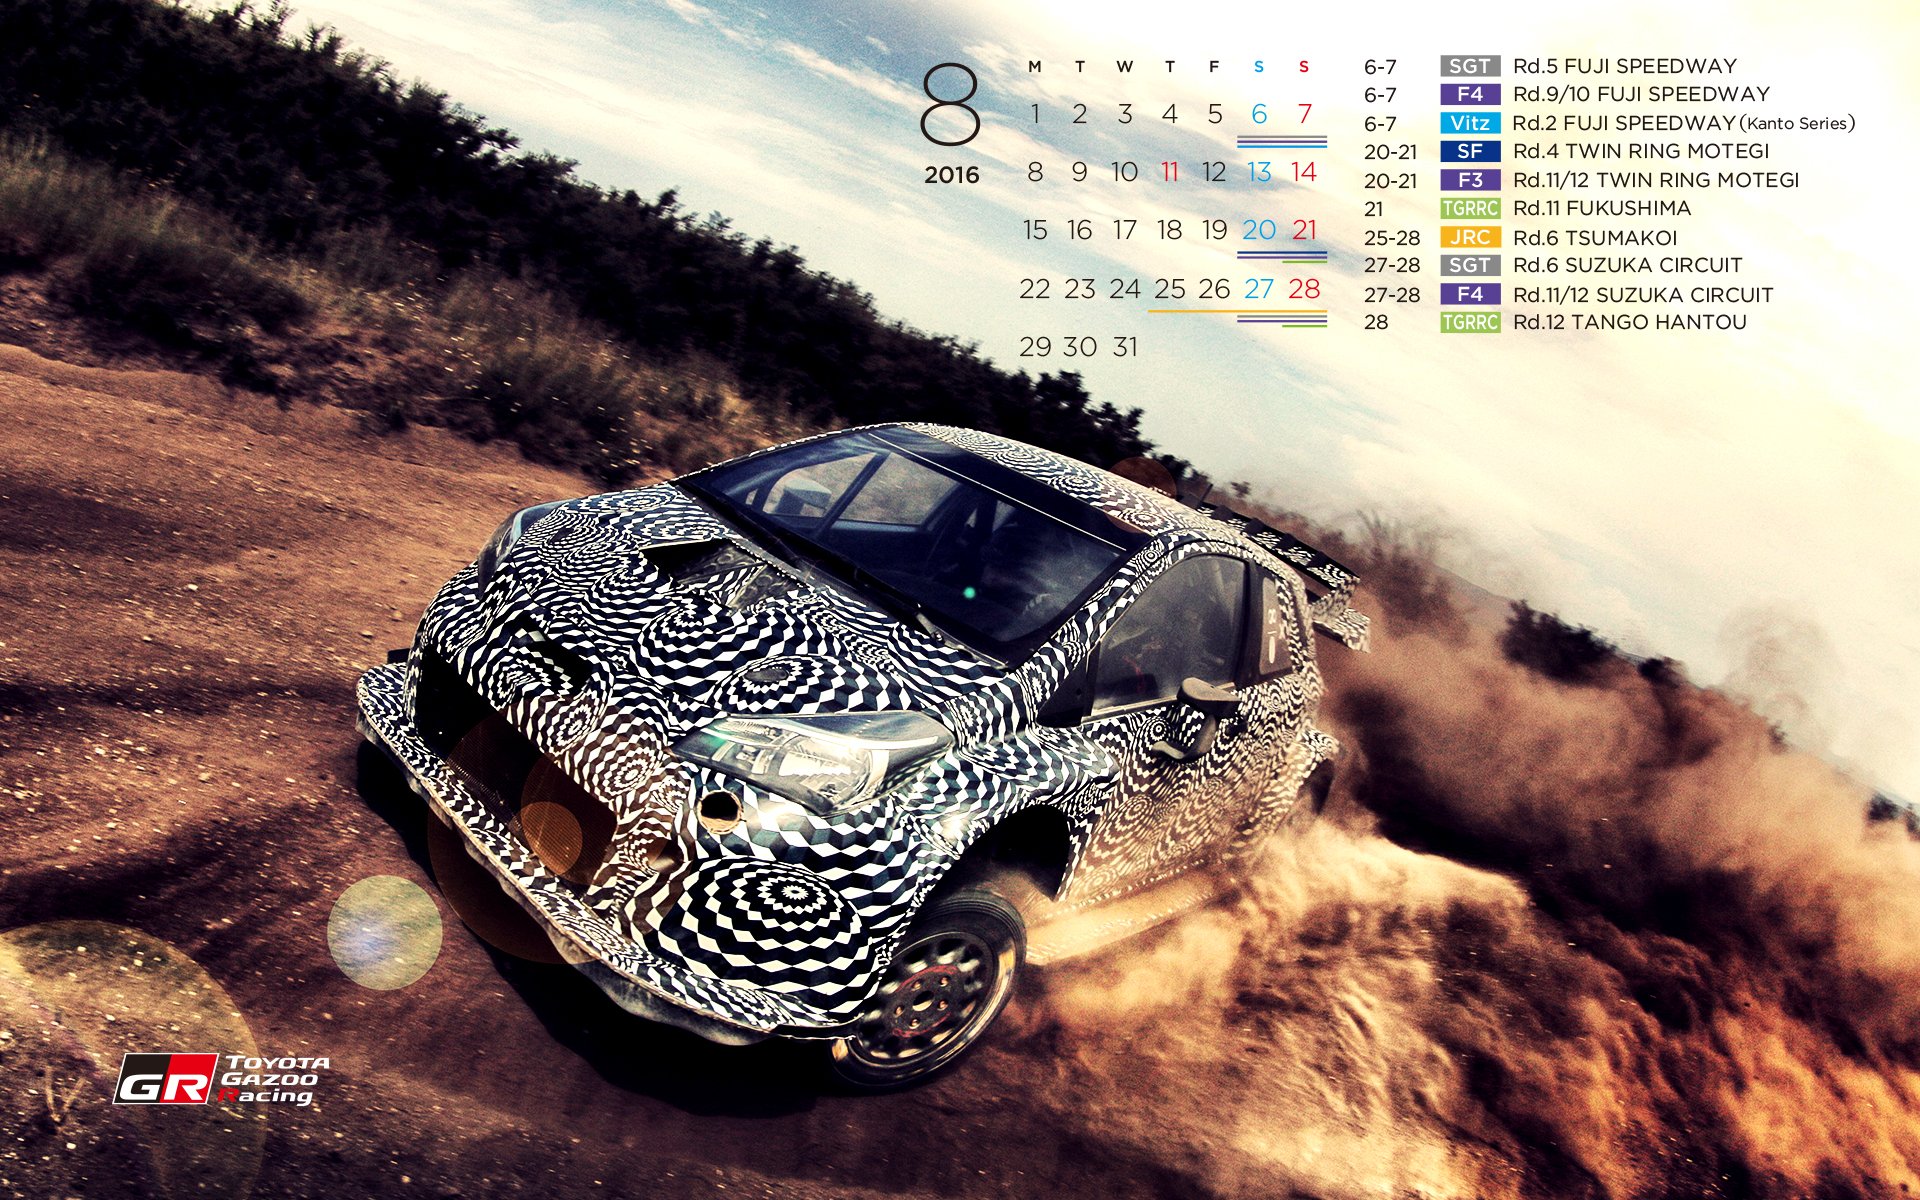 Toyota Gazoo Racing Twitter પર 壁紙カレンダー T Co 1gixzf492e Toyota Gazoo Racing壁紙カレンダー8月分公開 お仕事やモータースポーツ観戦にご活用ください